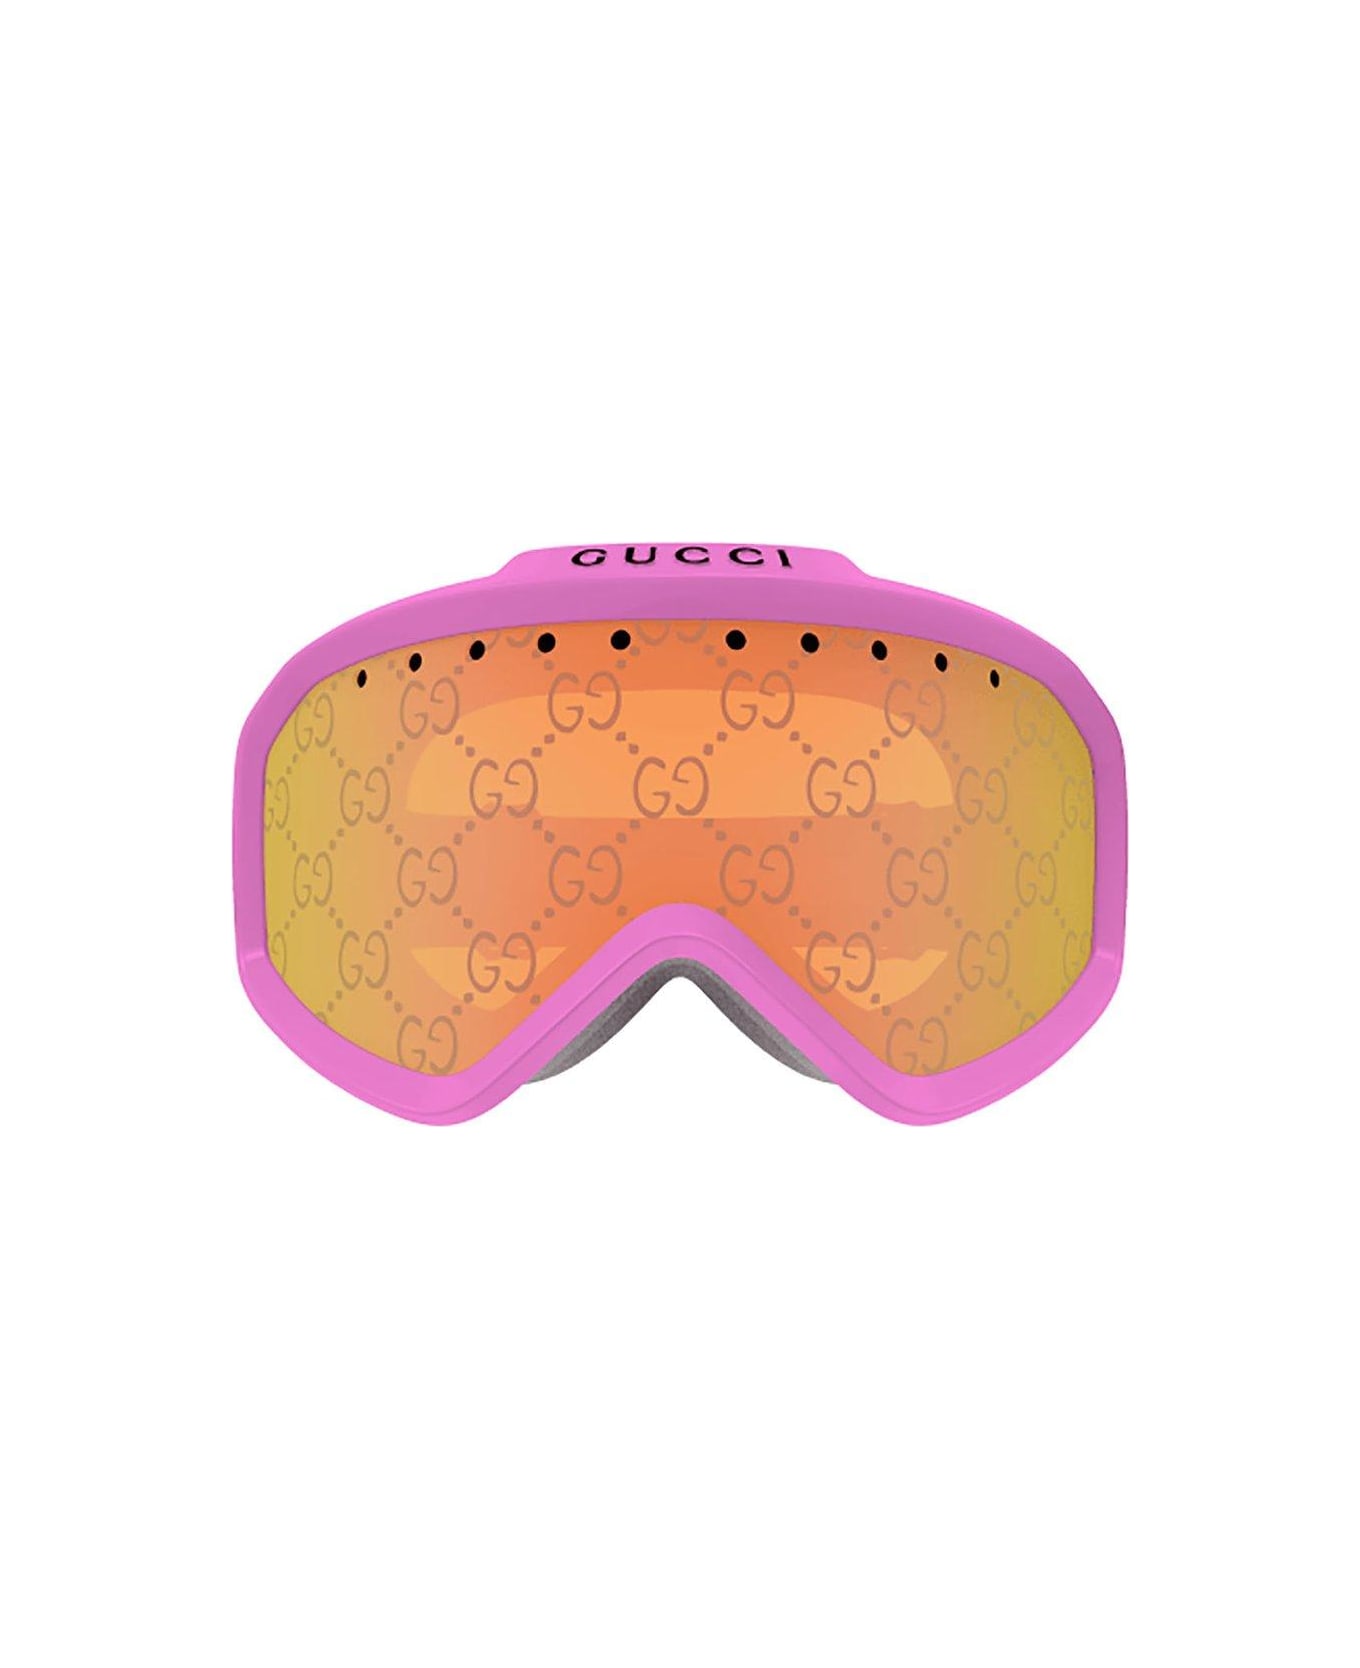 Gucci Eyewear Ski Oversized Frame Goggles - 004 pink multicolor yello サングラス